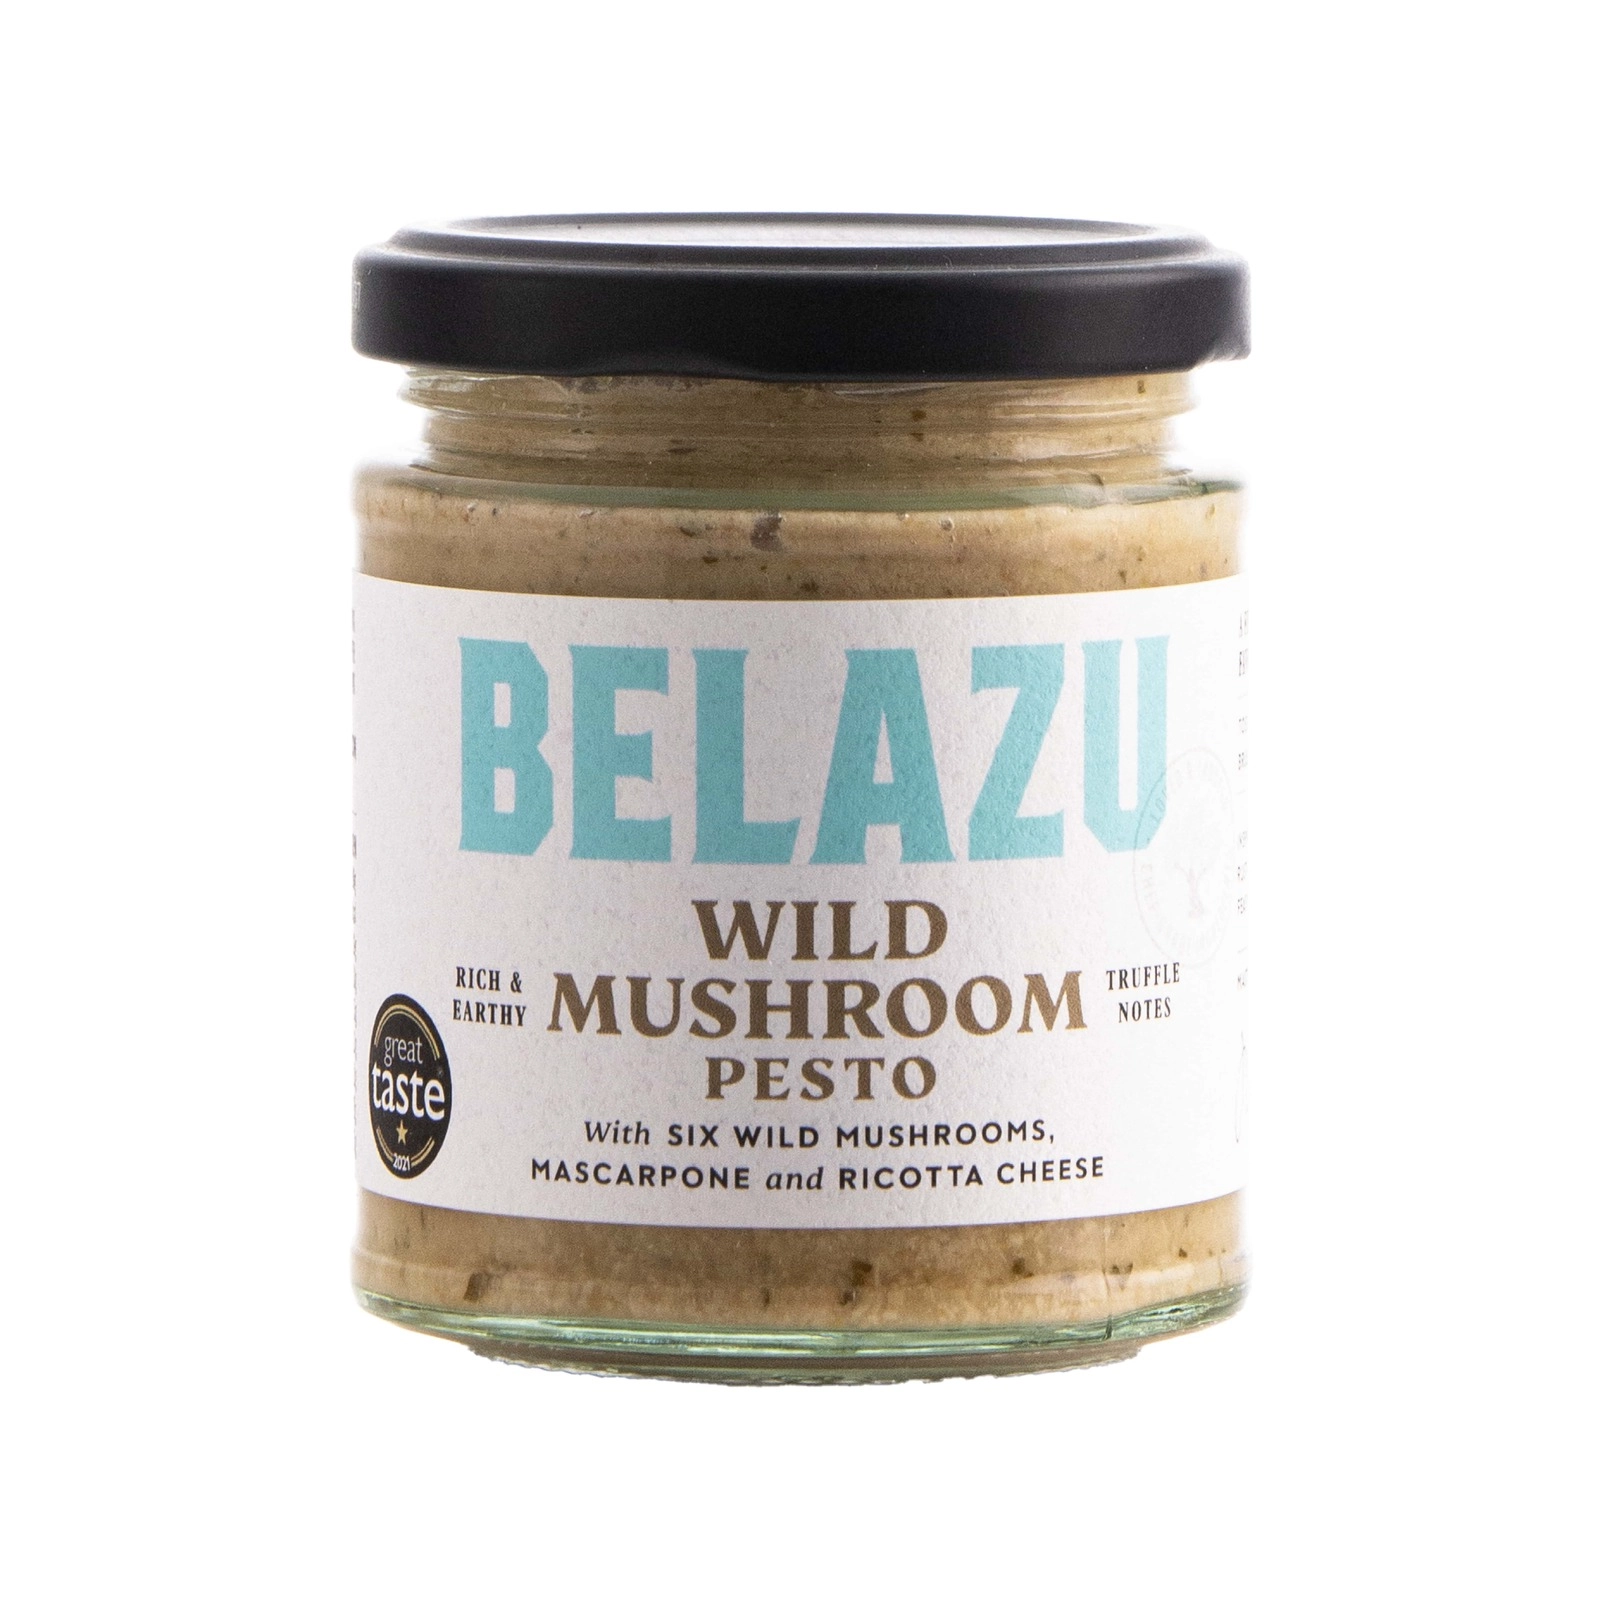 BELAZU Wild Mushroom Pesto (165g)